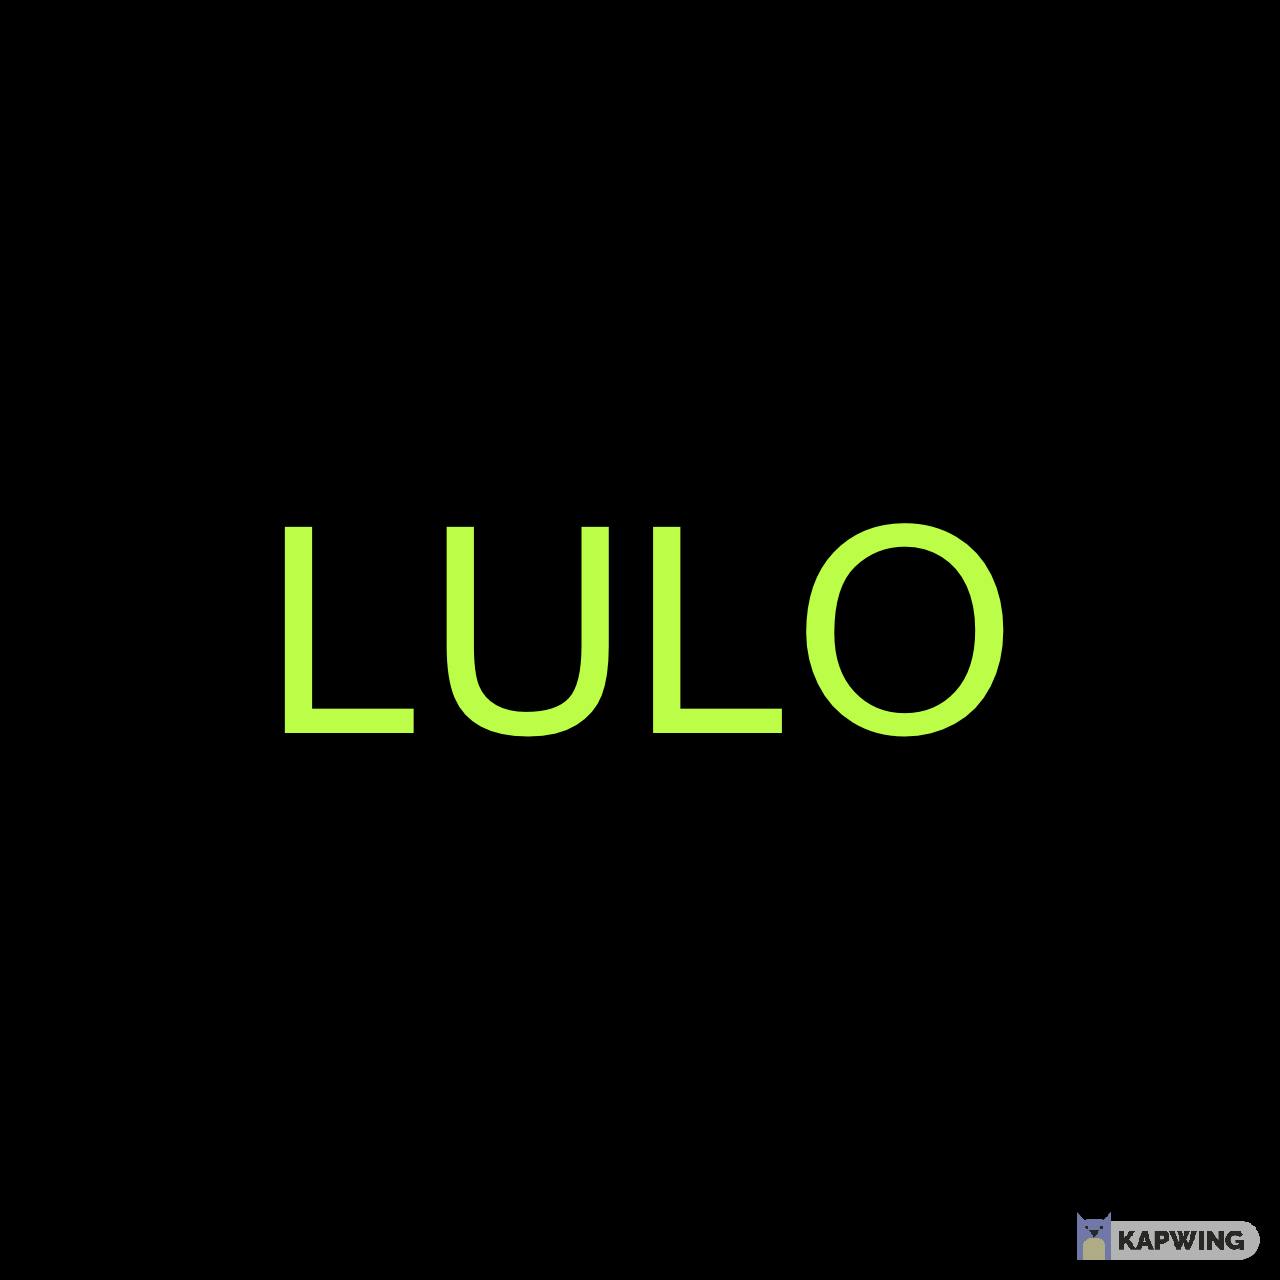 Lulo [UPDATED VERSION]